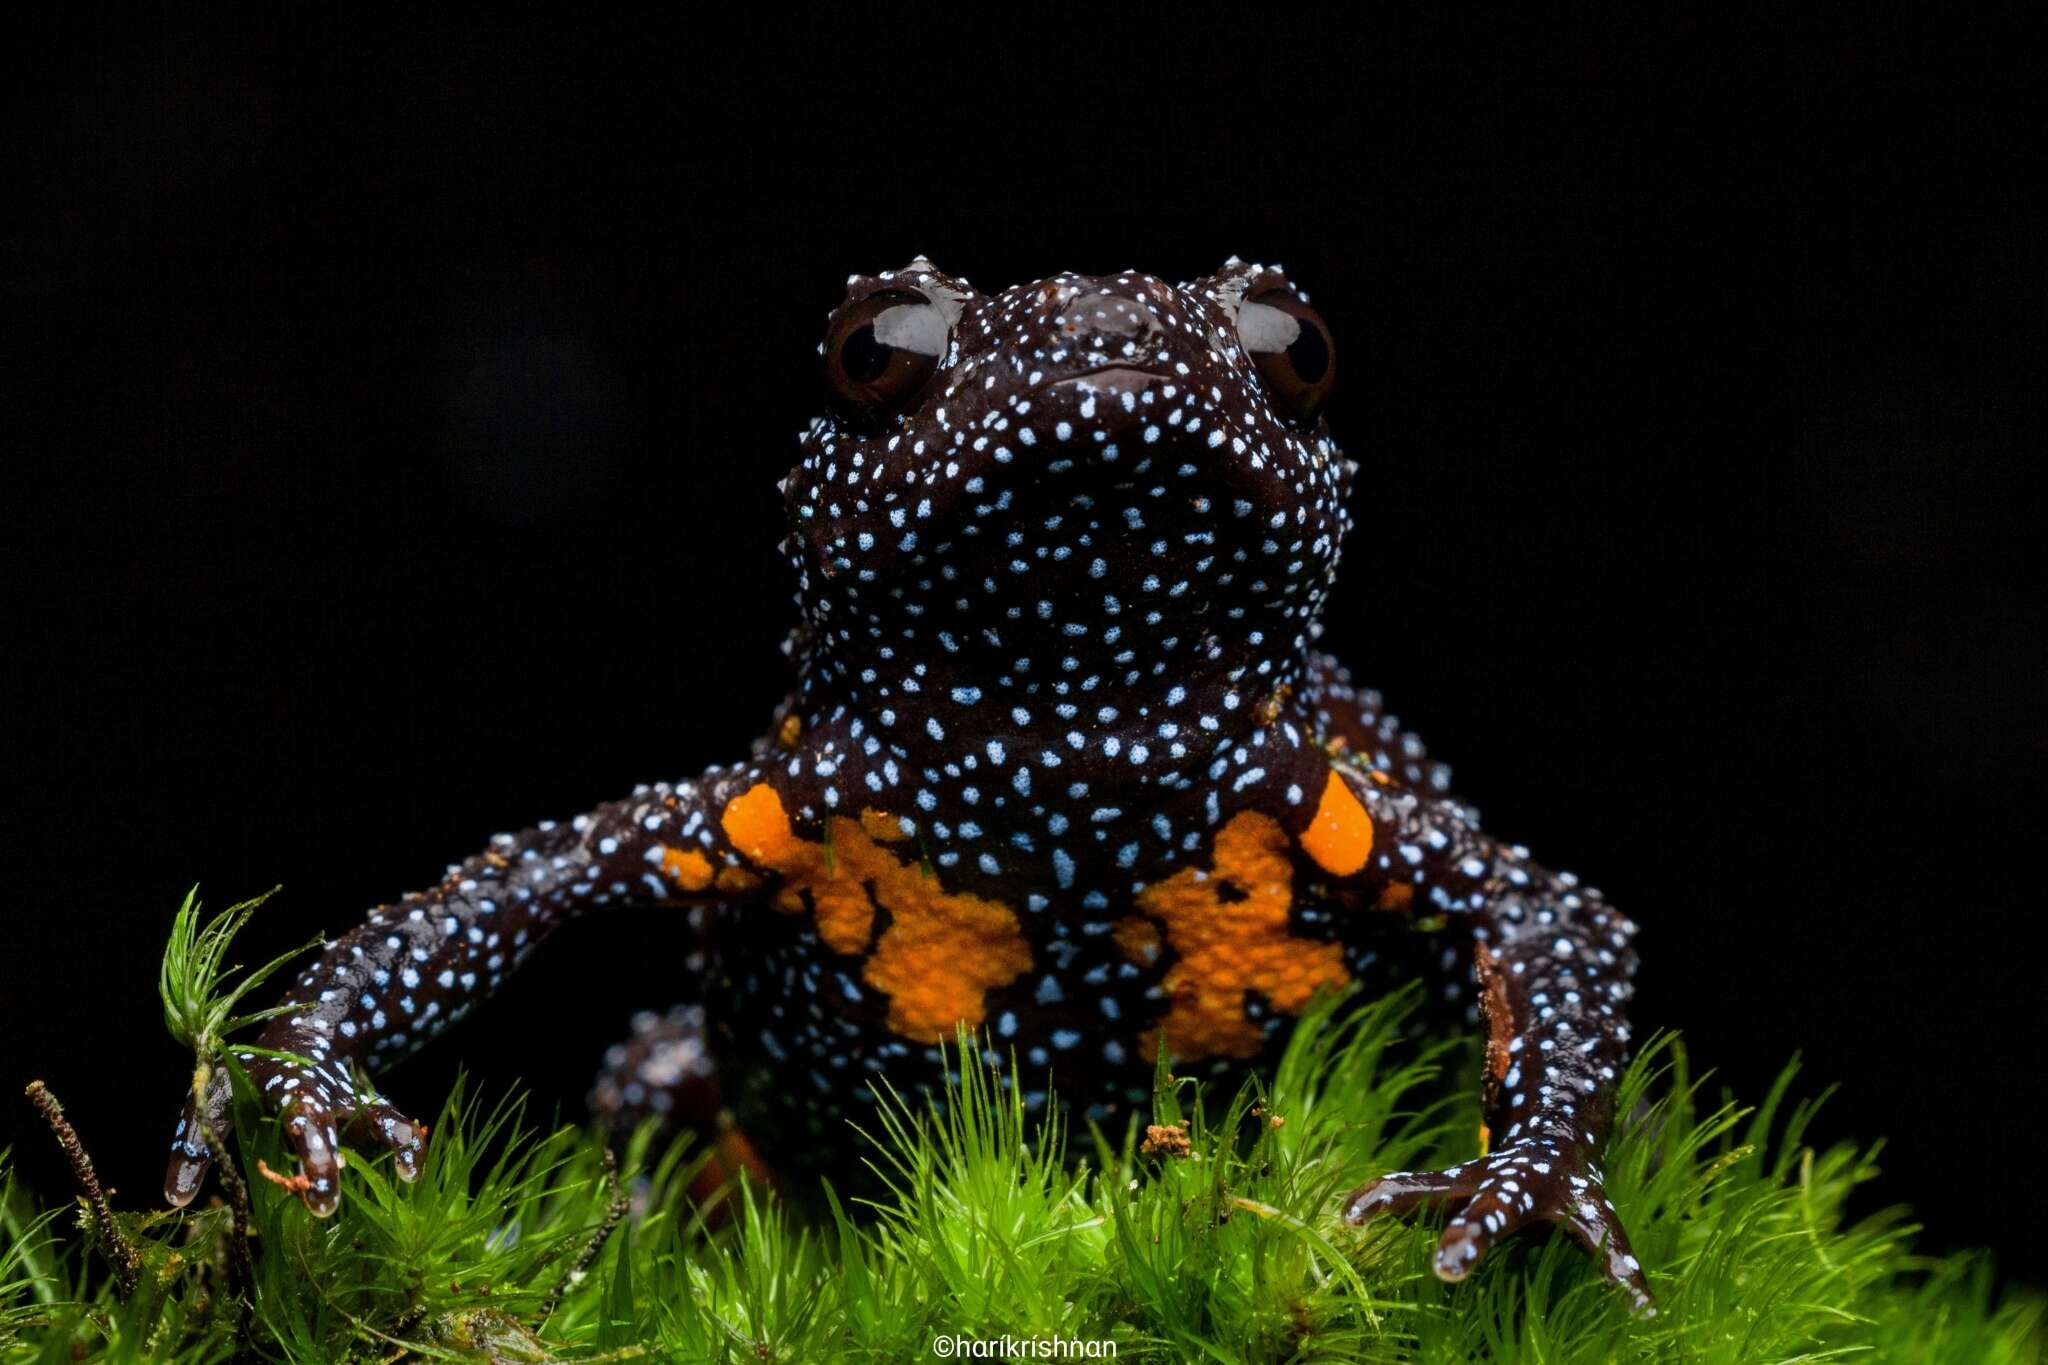 Image of Malabar black narrow-mouthed frog